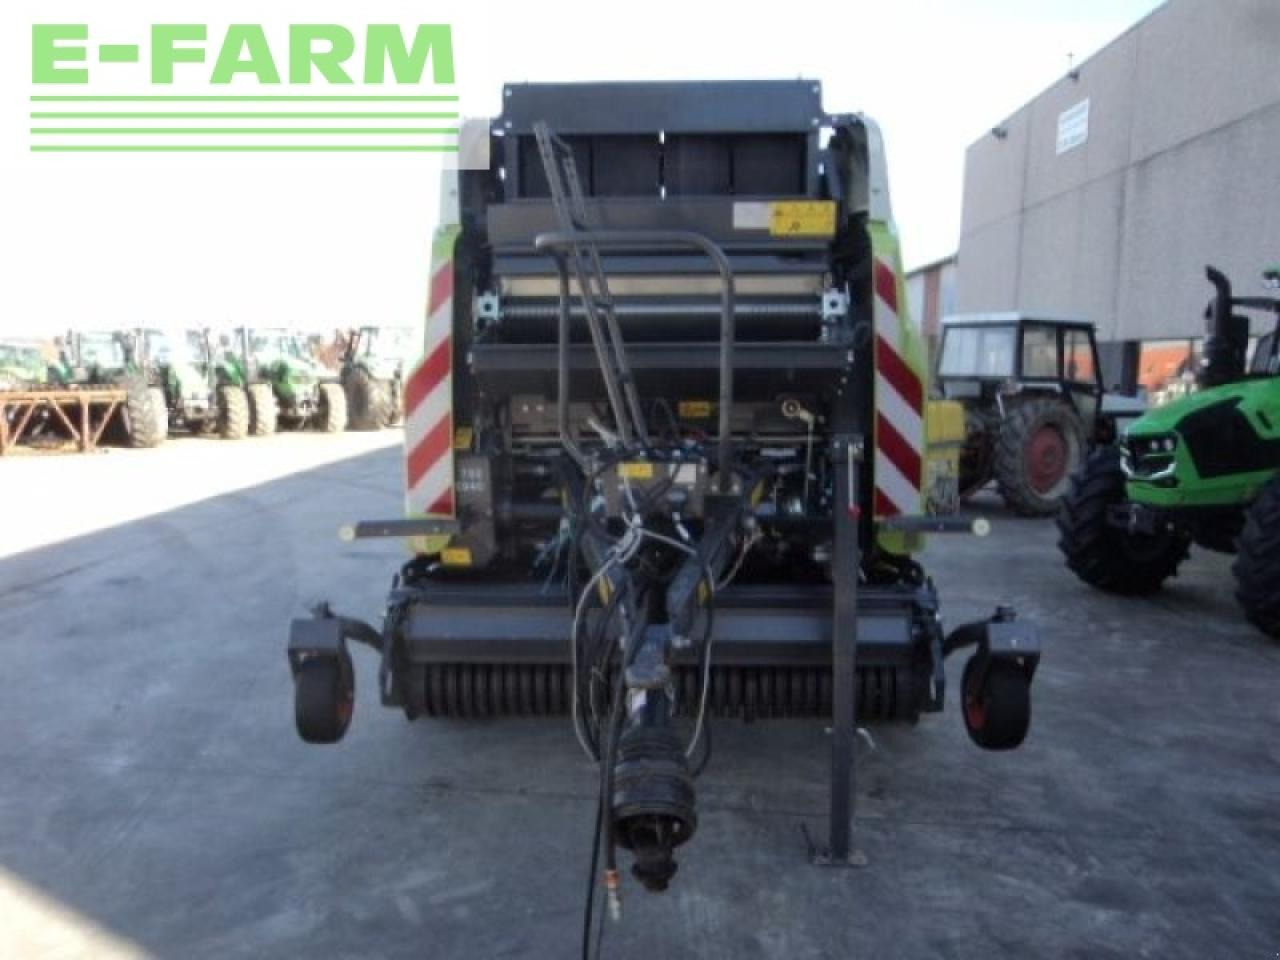 Farm tractor CLAAS variant 485 rc